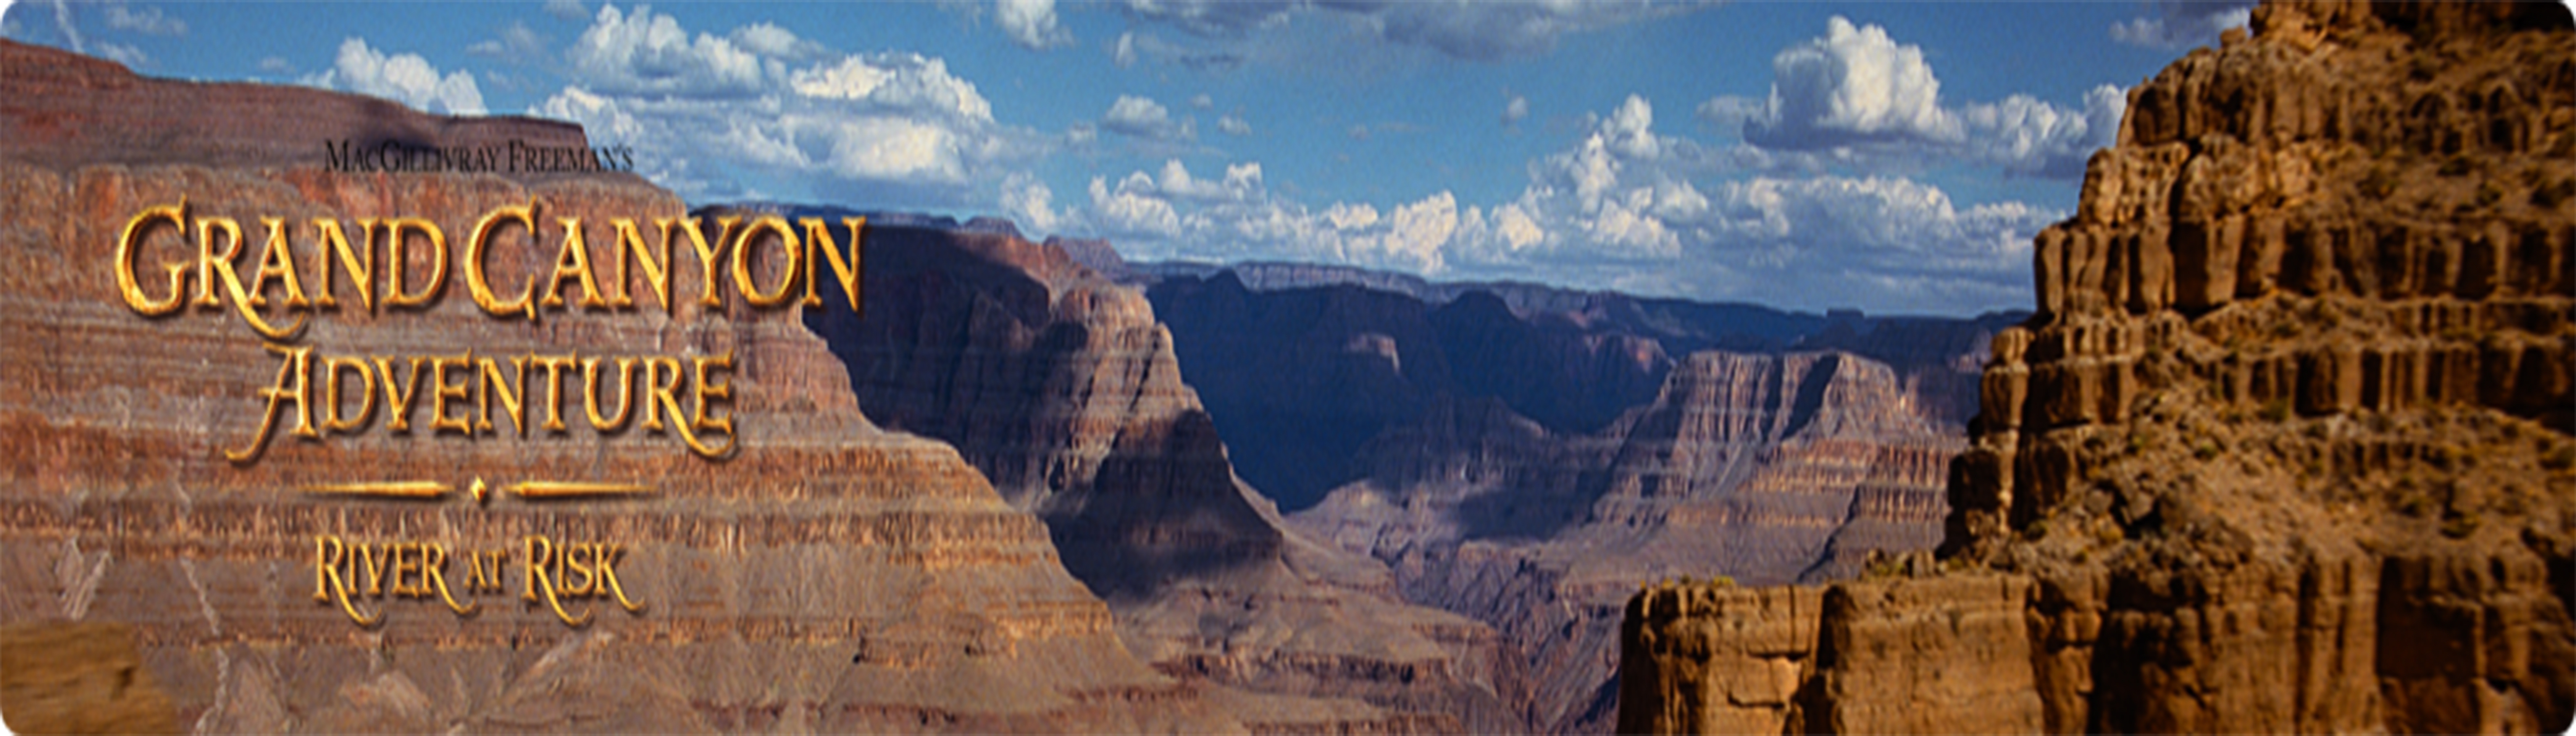 دانلود فیلم مستند 2008 Grand Canyon Adventure River at Risk 3D